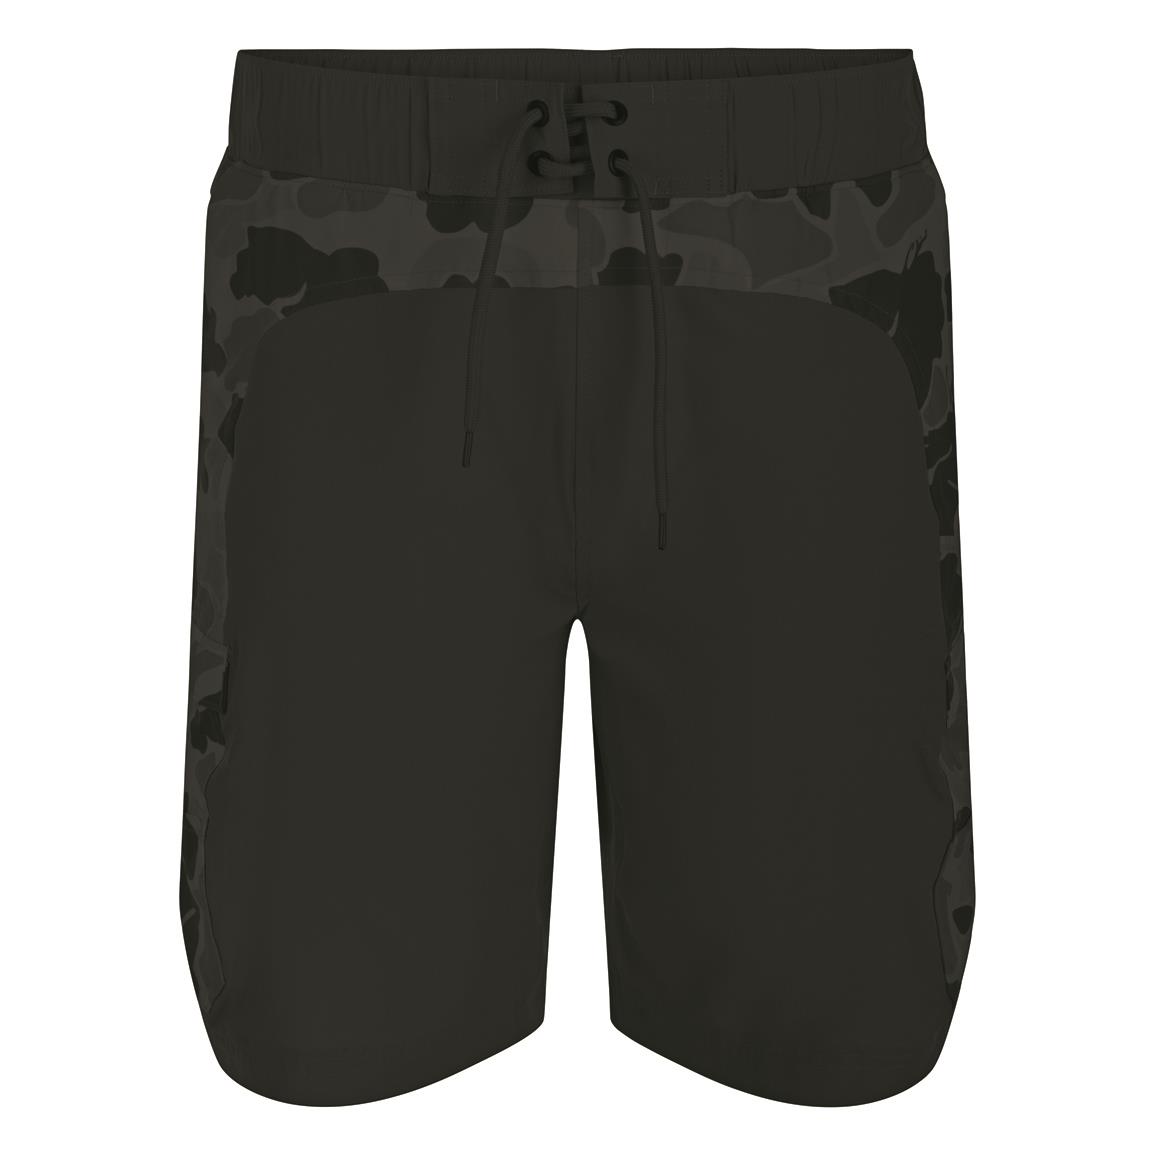 Drake Waterfowl Men's Commando Lined Board Shorts, 9", Caviar Black/ Os Black